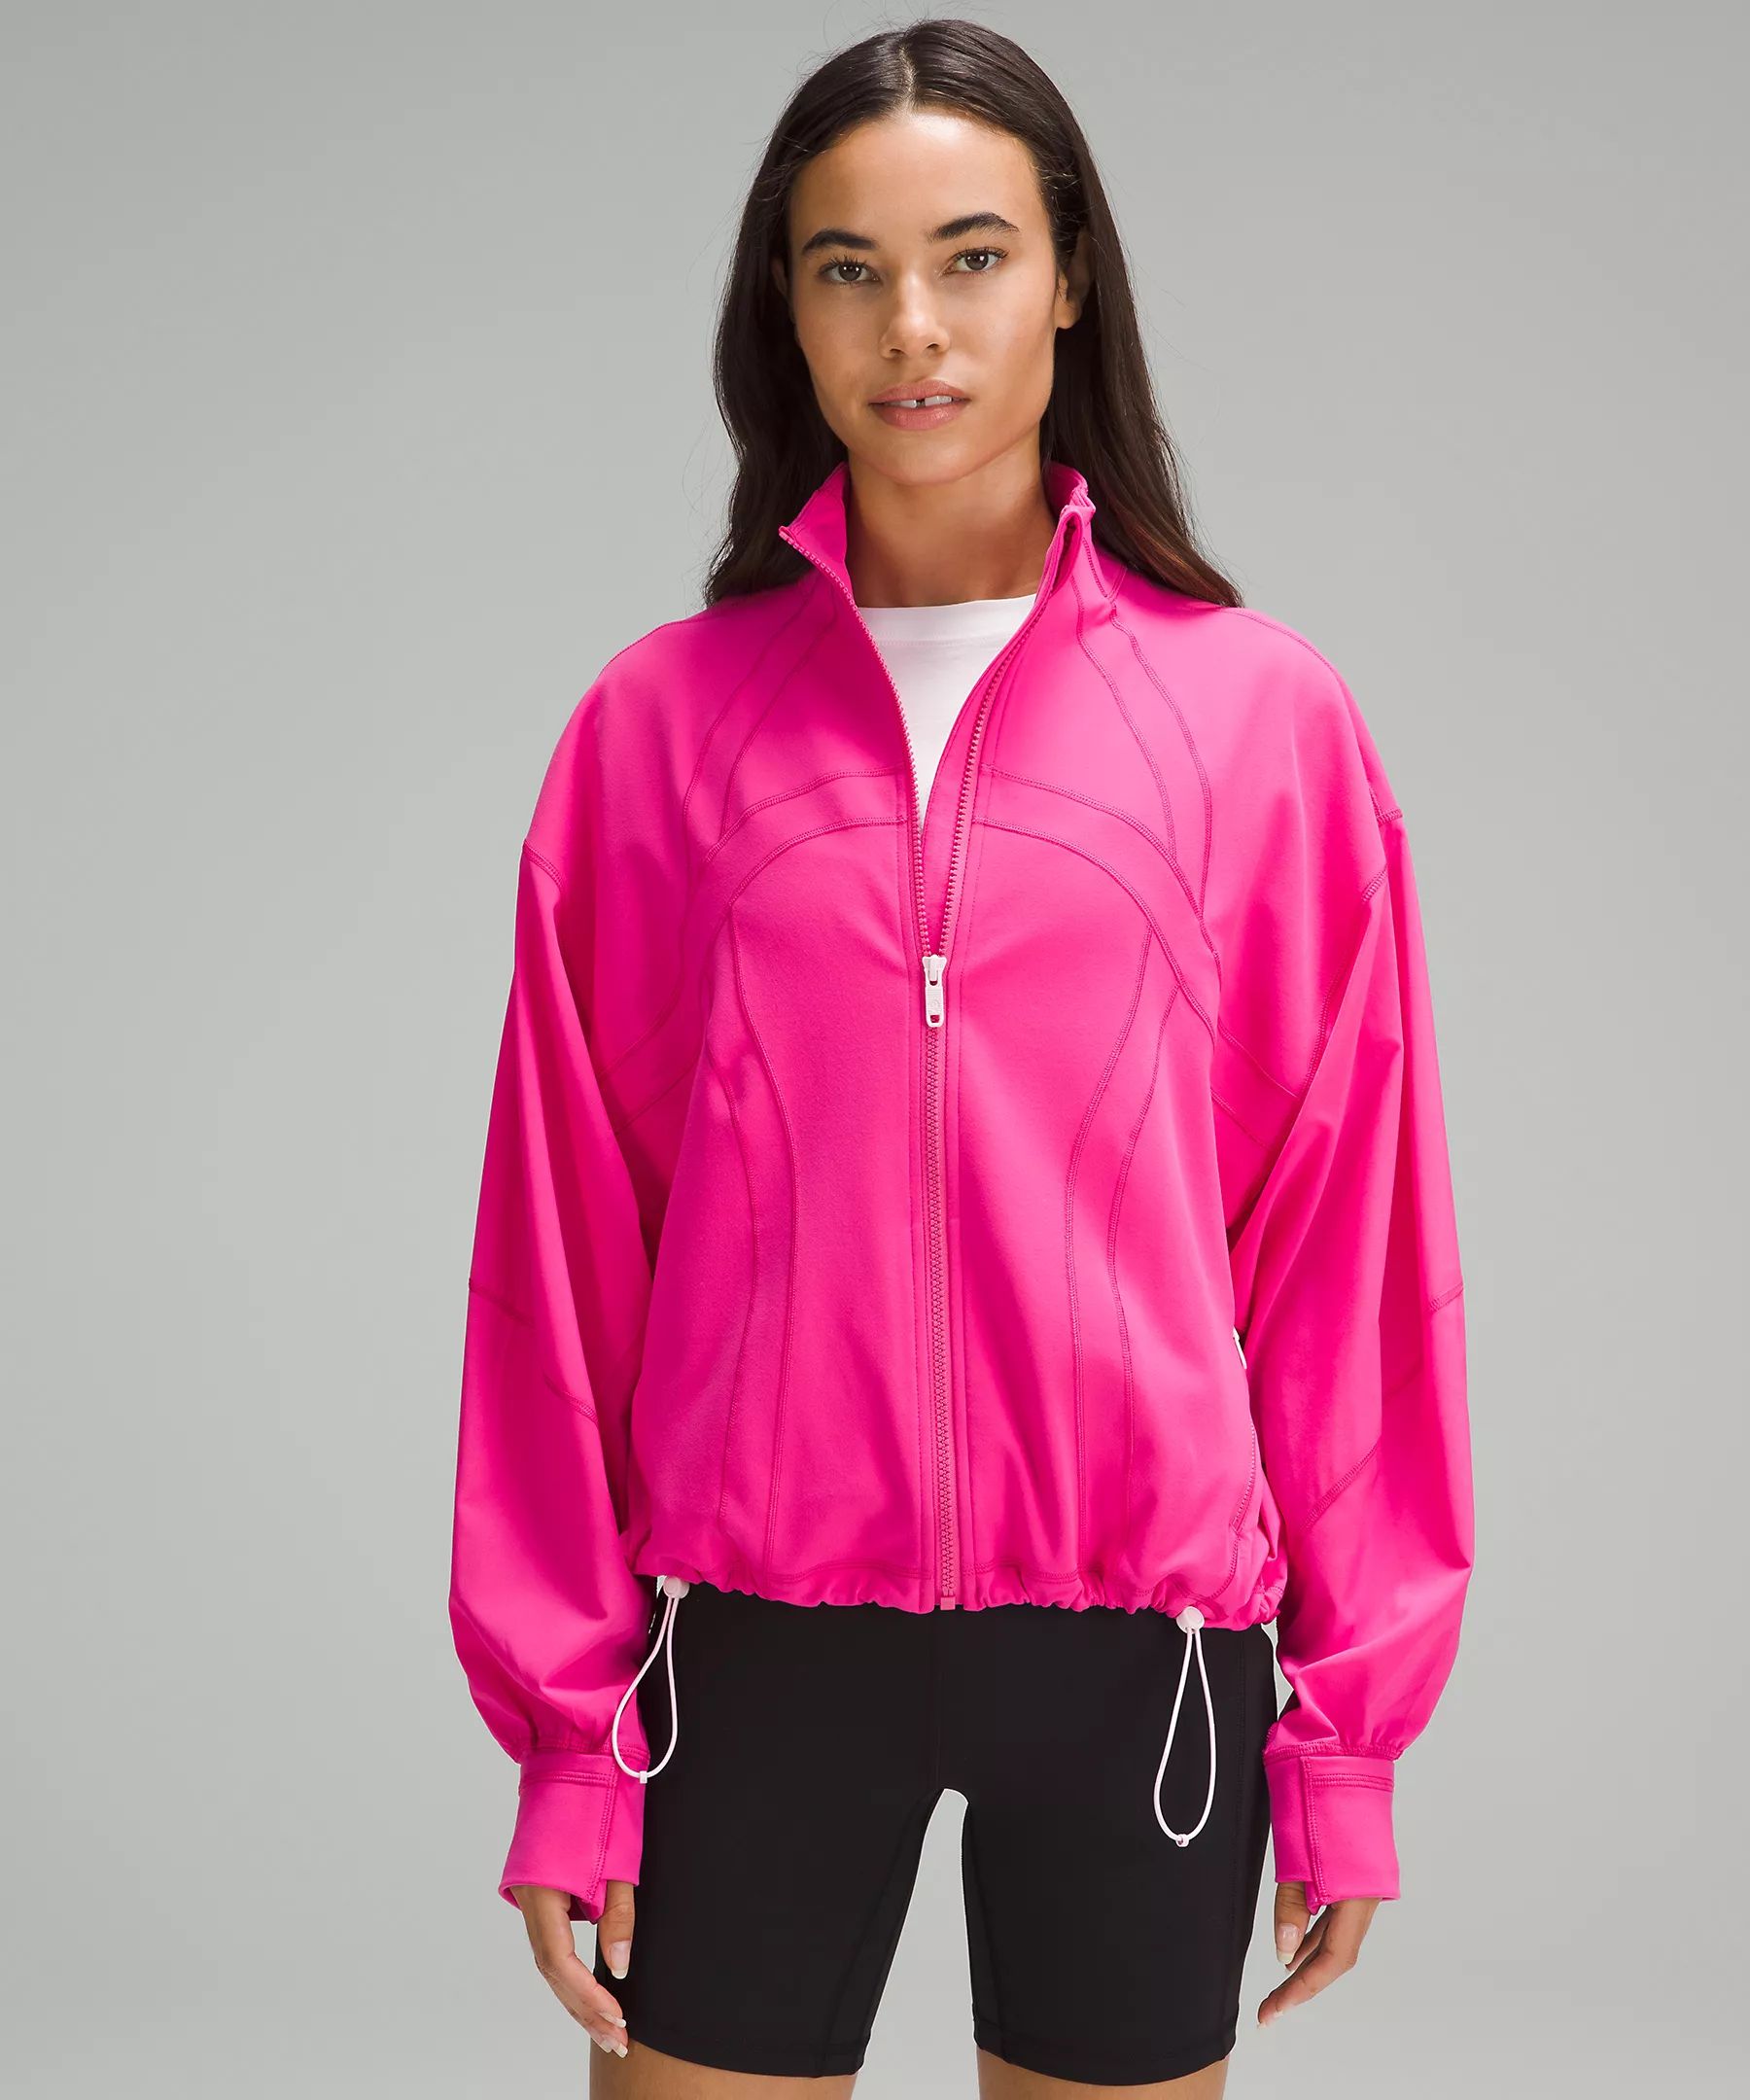 Define Relaxed-Fit Jacket *Luon | Women's Hoodies & Sweatshirts | lululemon | Lululemon (US)